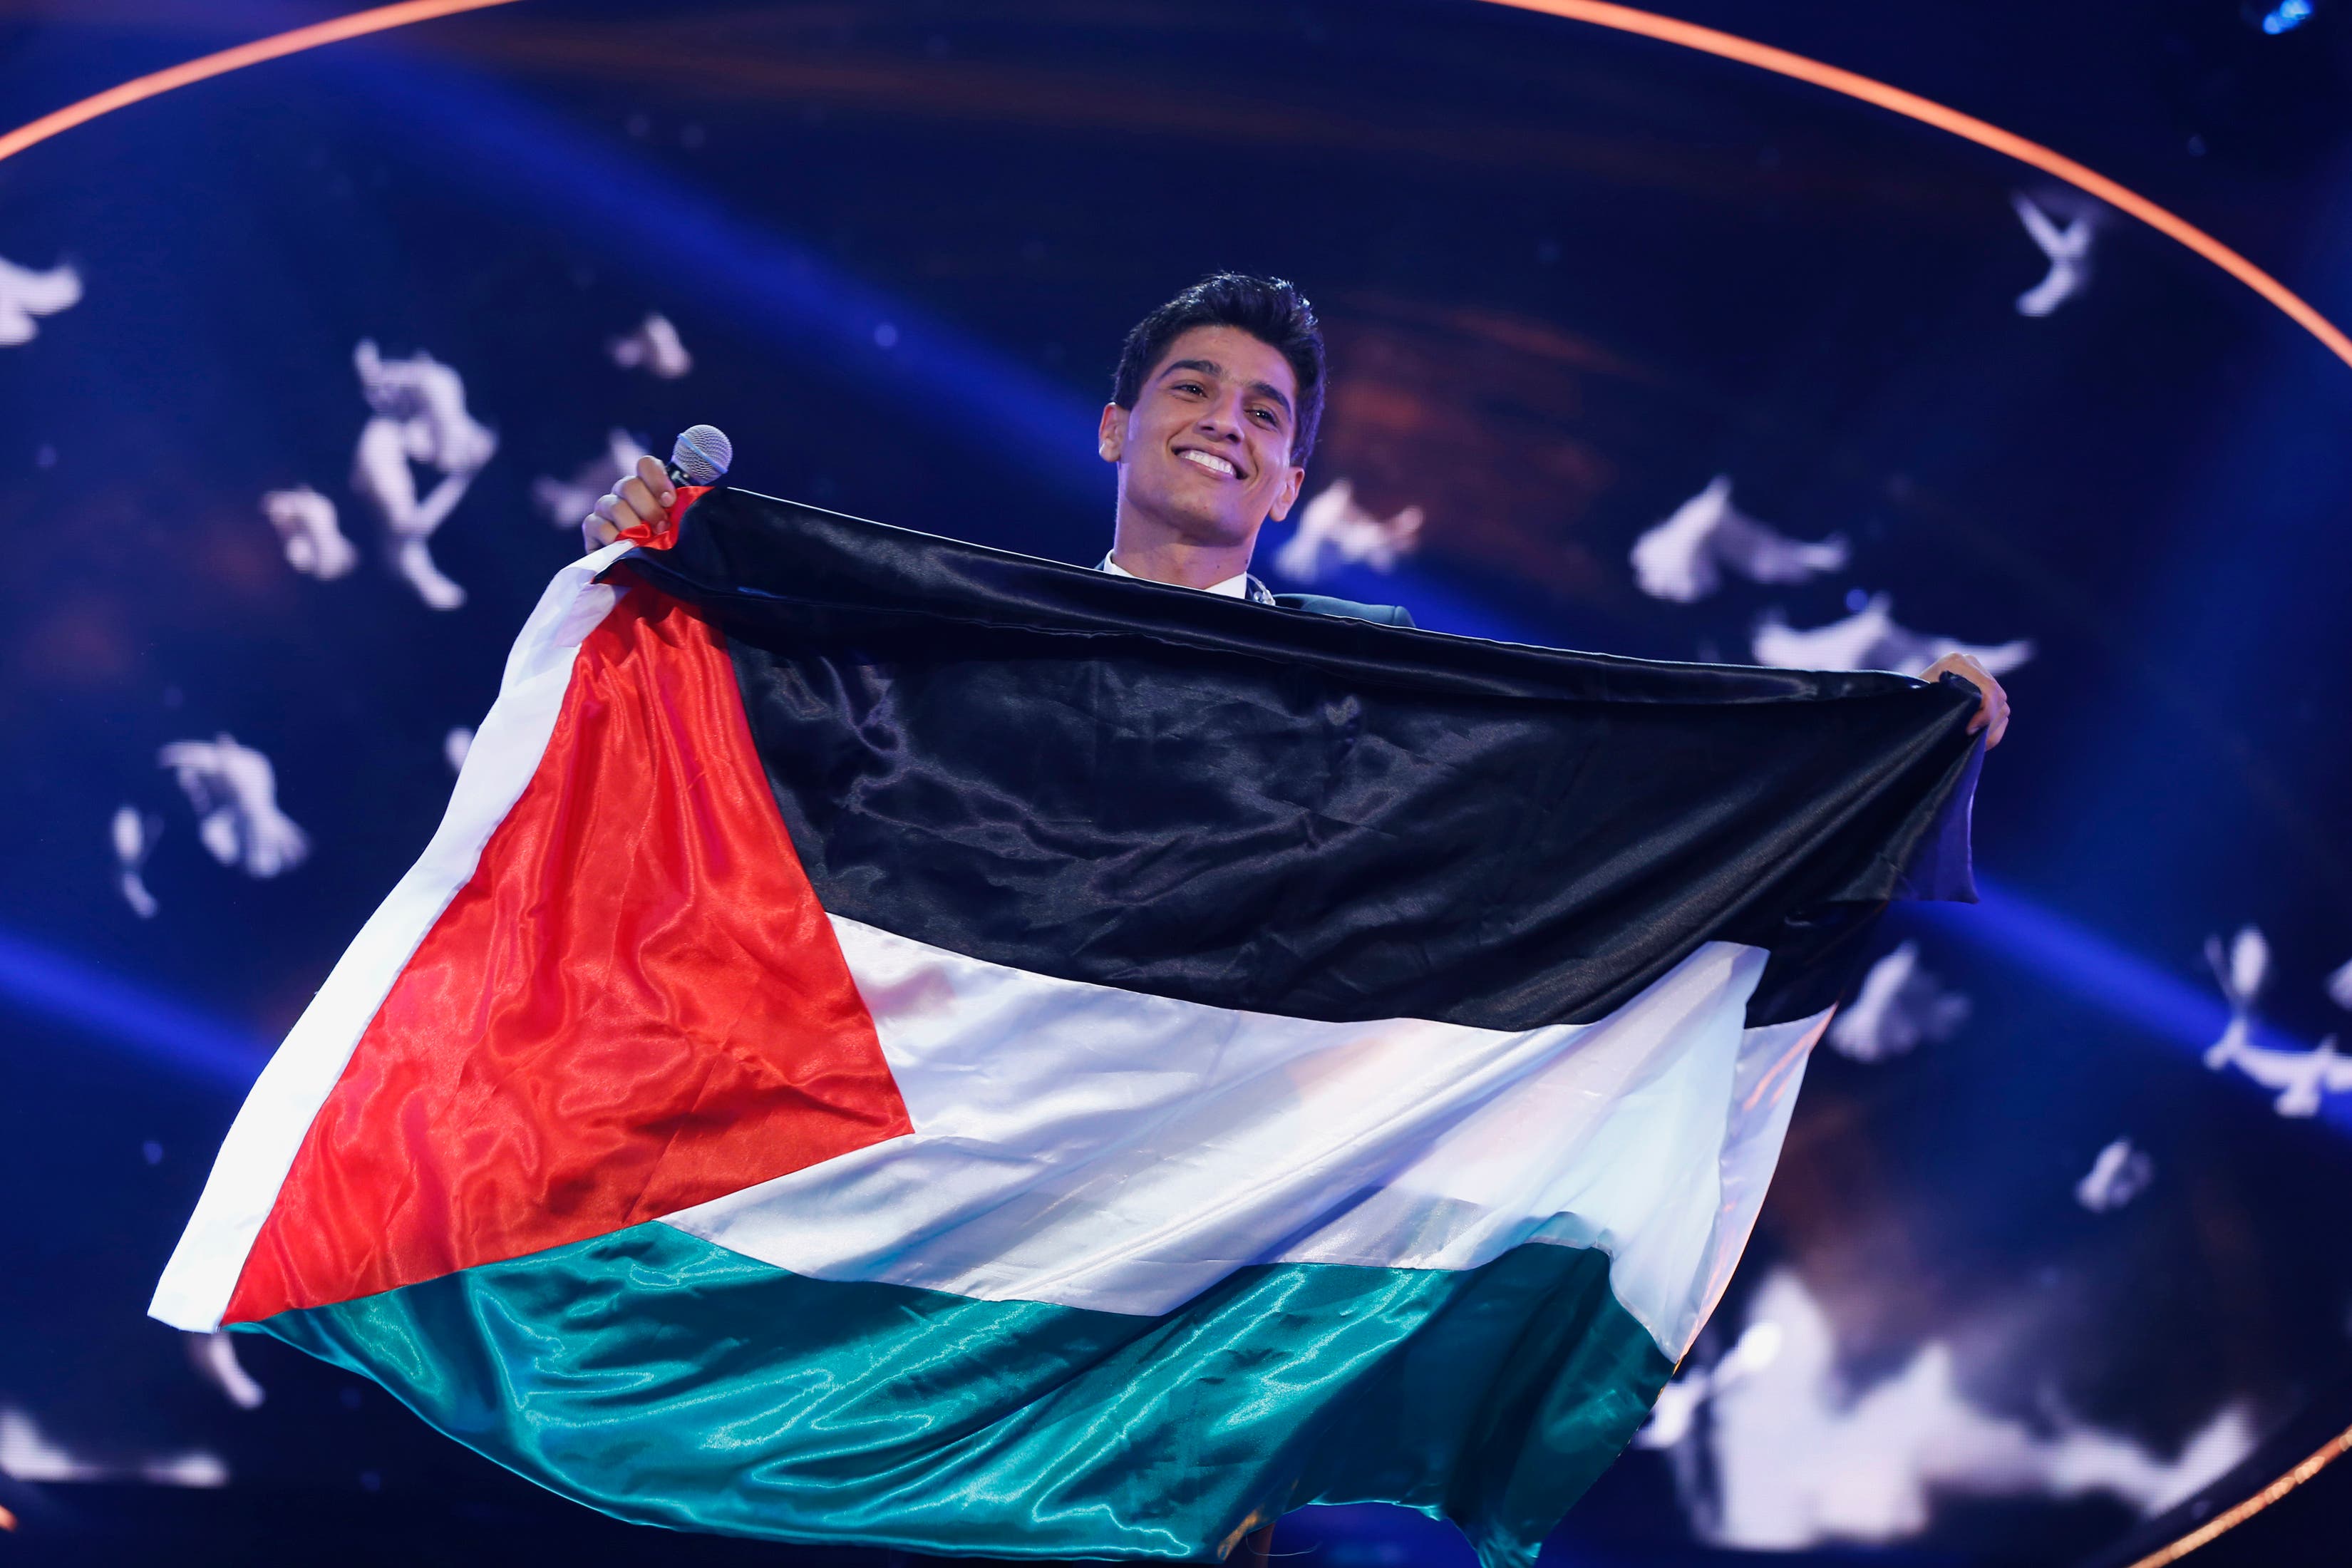 Palestinian wins "Arab Idol"